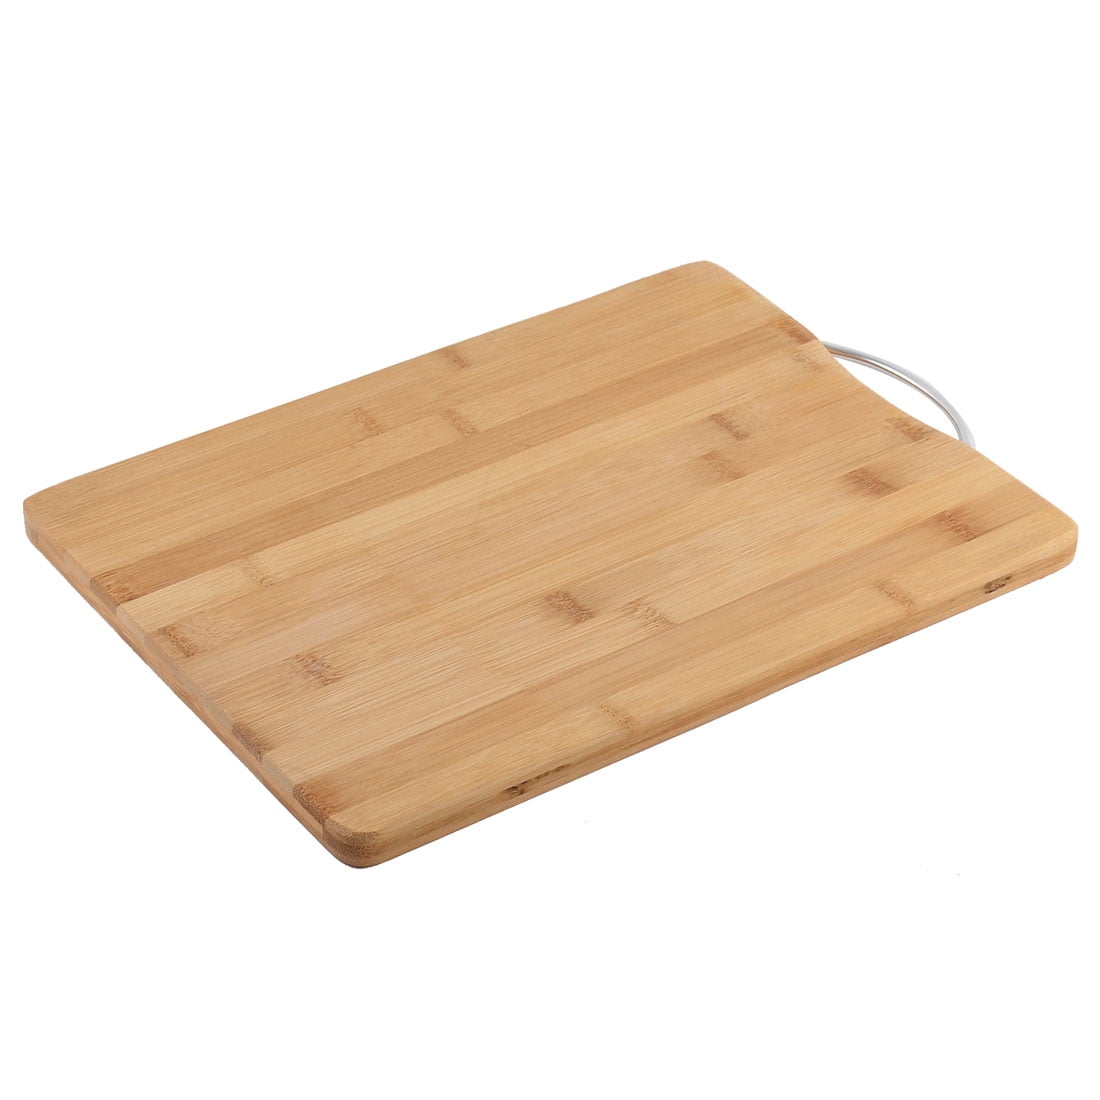 Bamboo Cutting Board прямоугольная